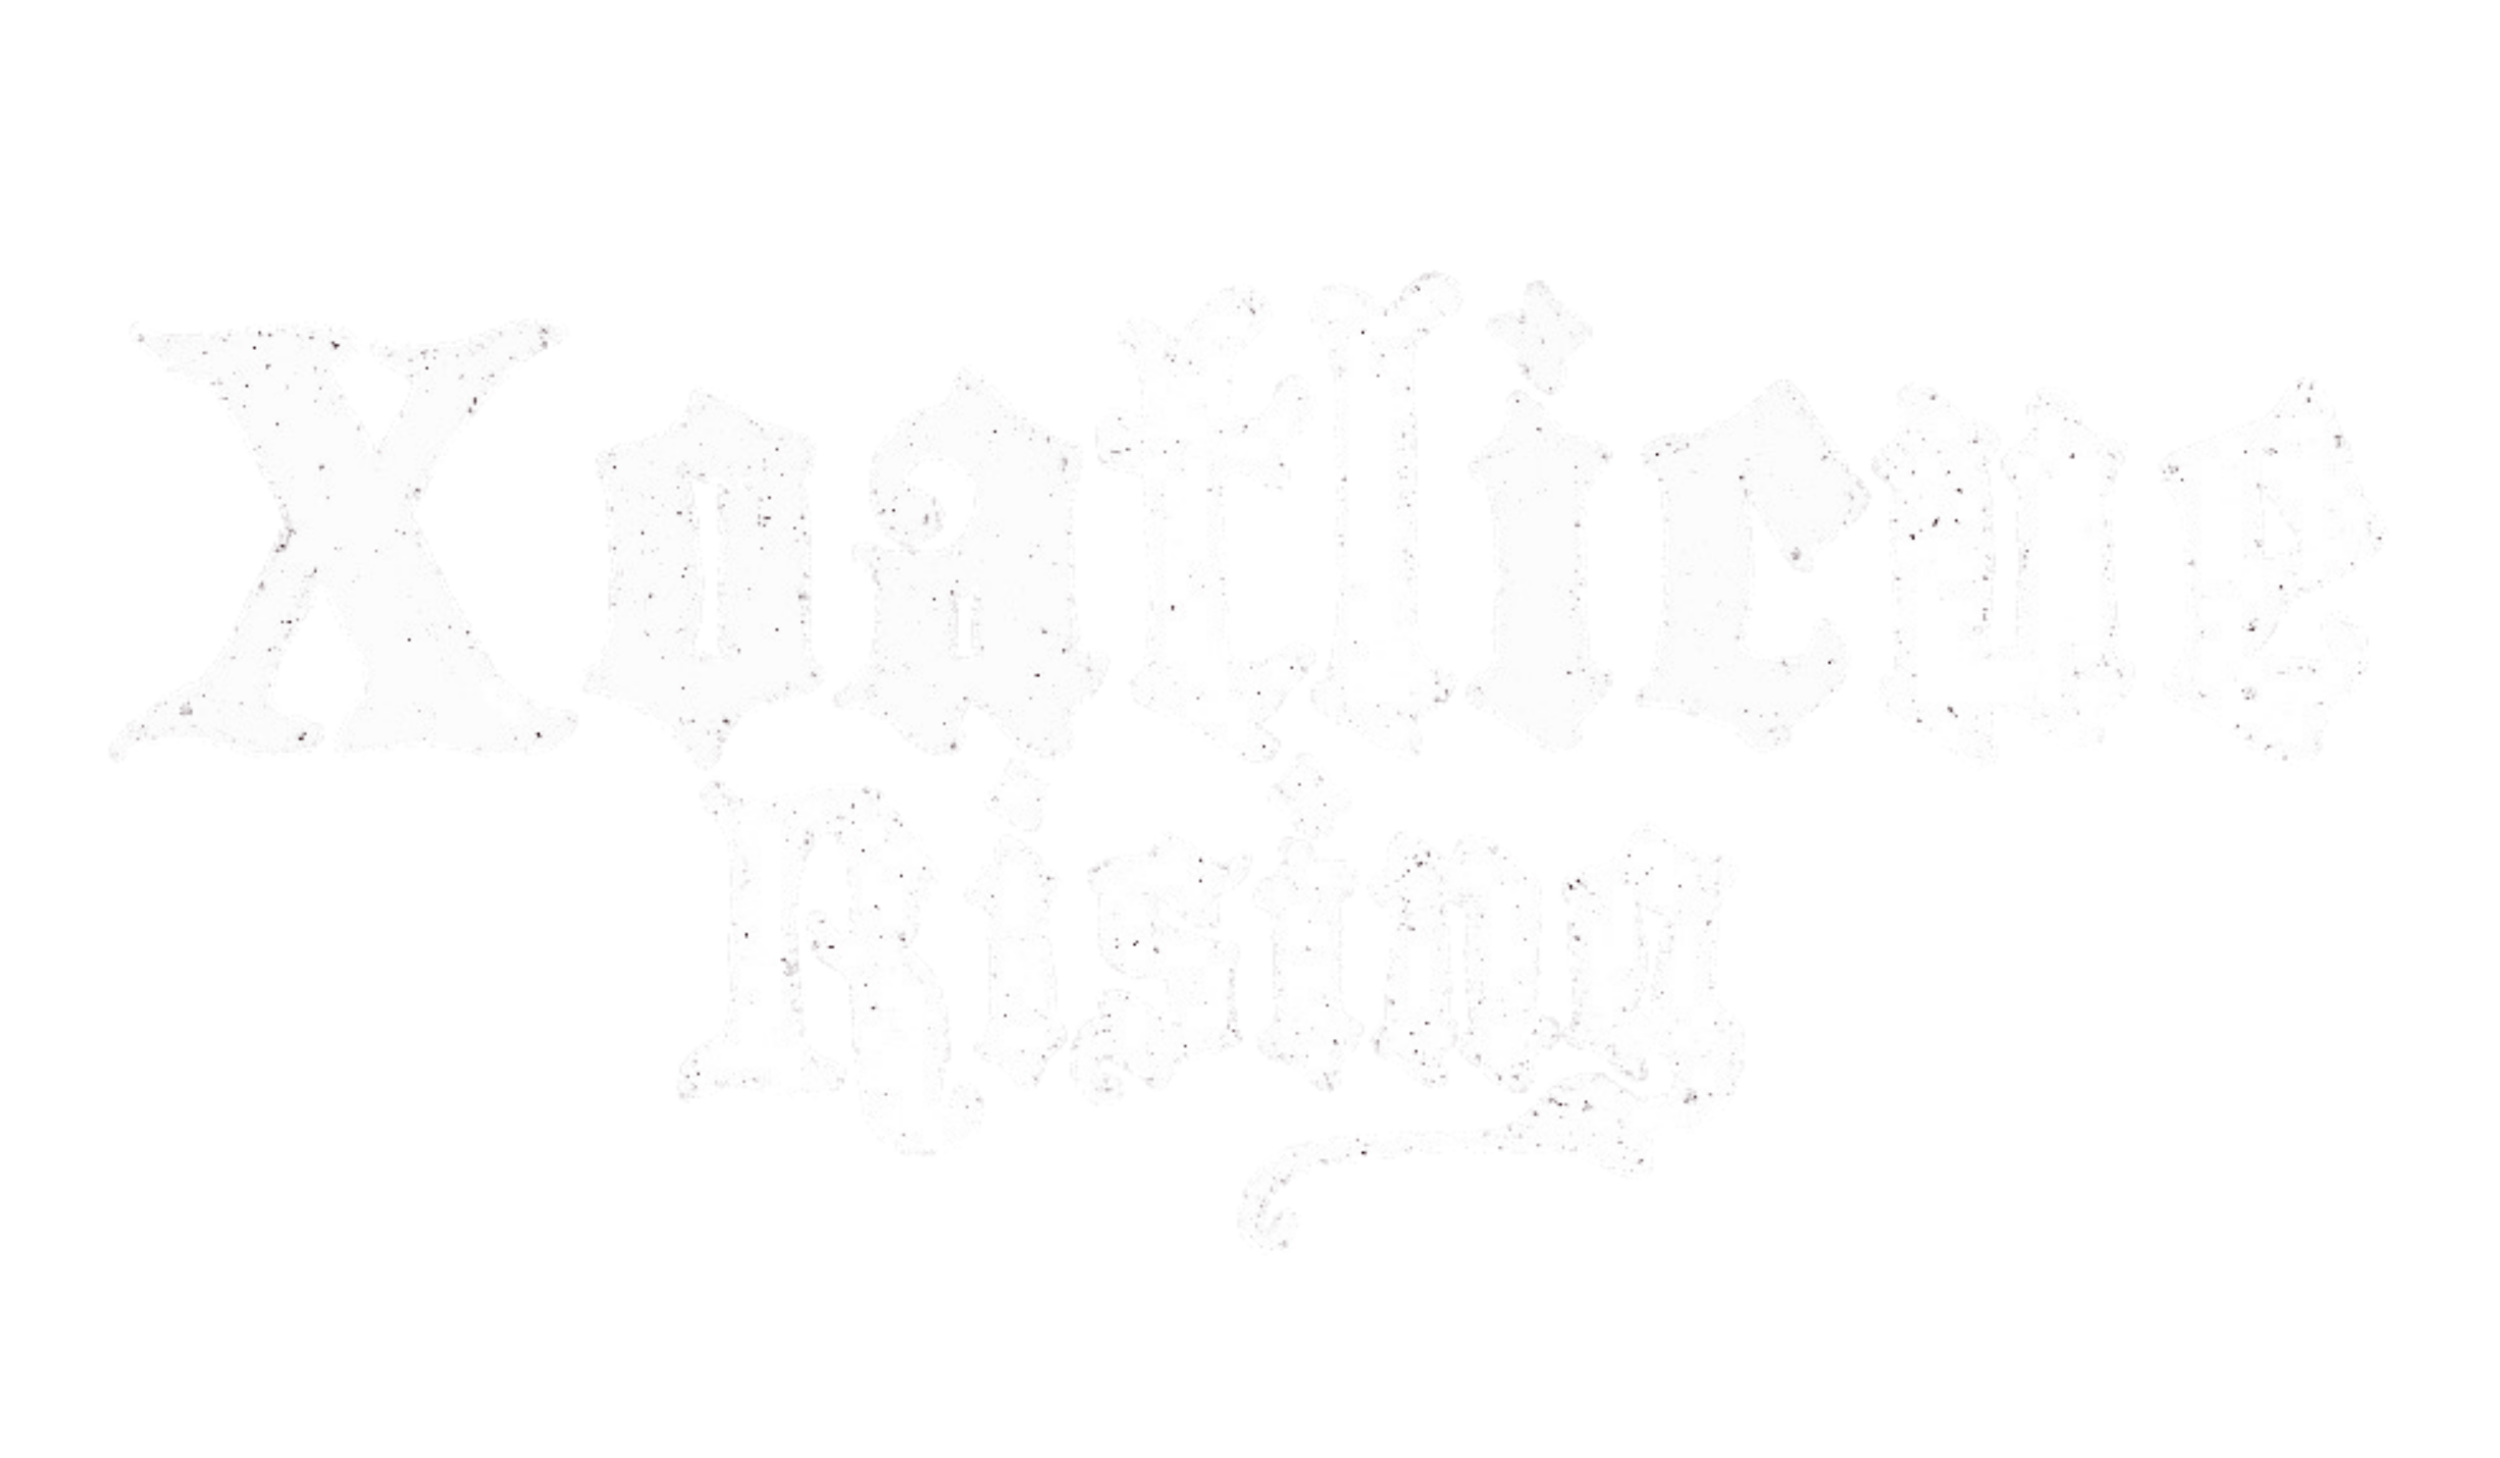 Xoatlicue Rising 